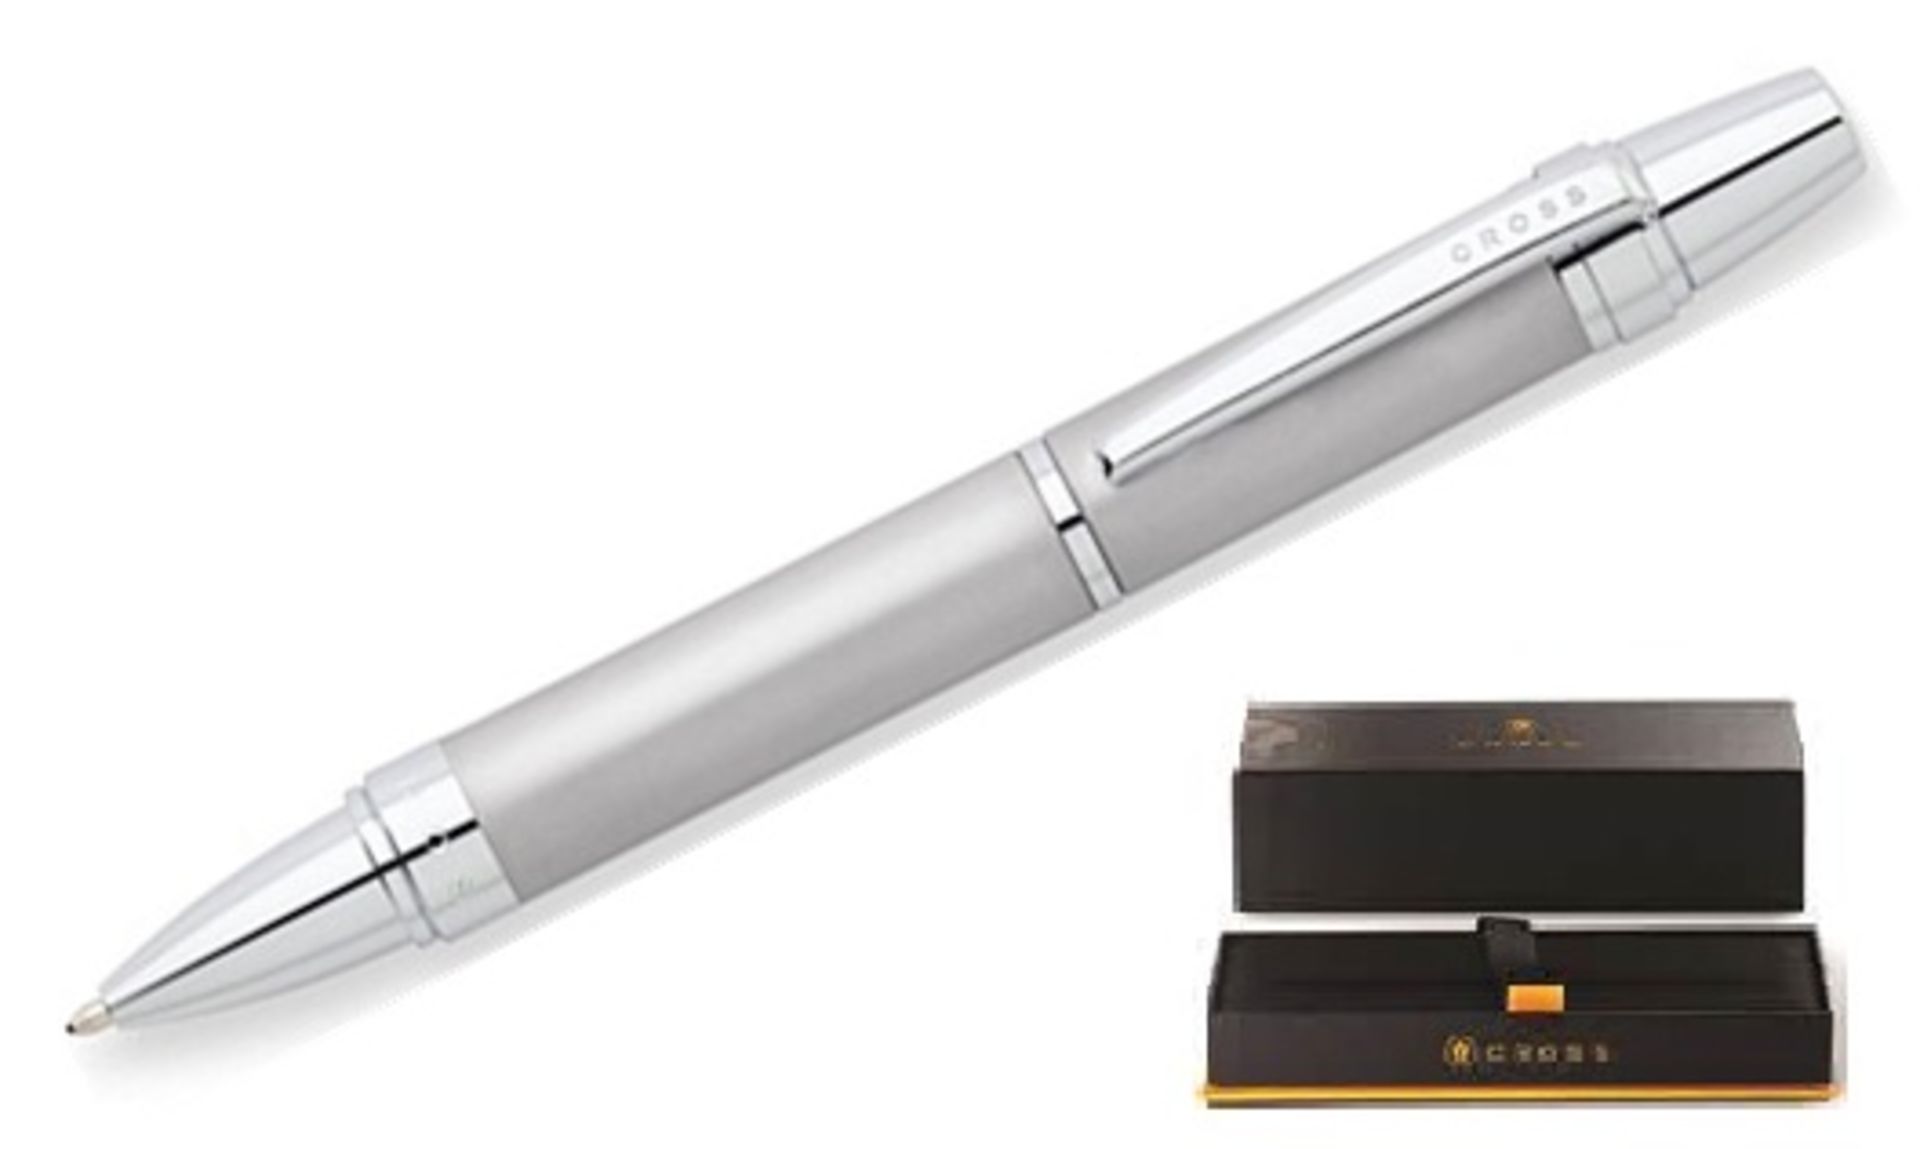 V *TRADE QTY* Brand New Cross Nile Satin Chrome Ballpoint Pen - RRP £25.00 - Amazon Price £17.68 X 5